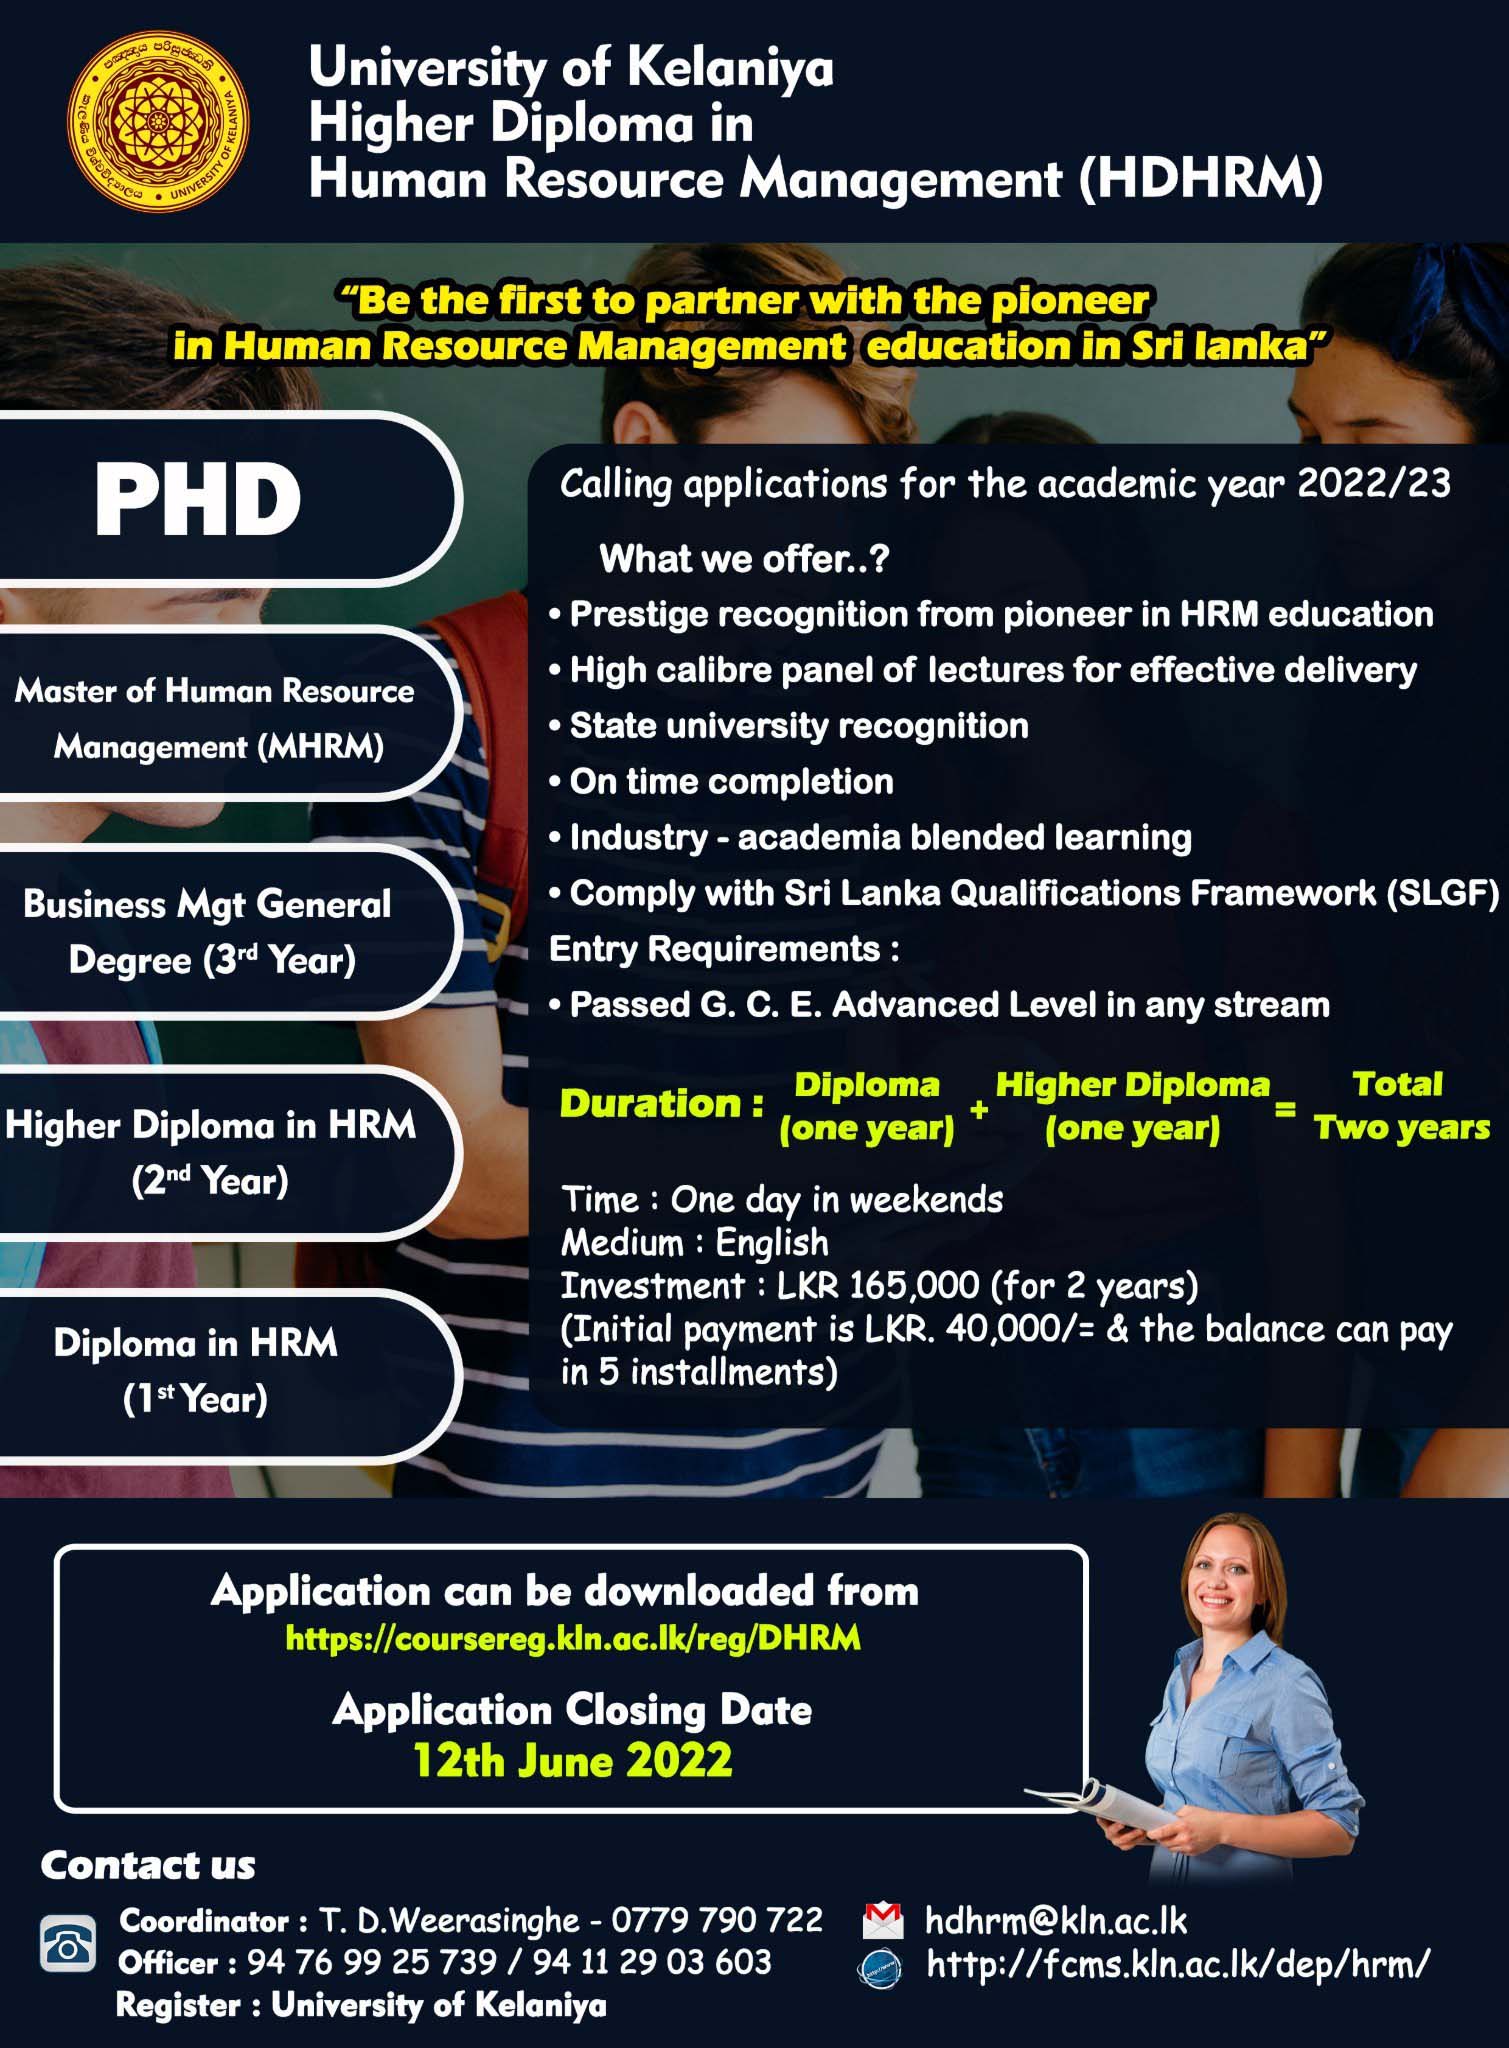 Higher Diploma in Human Resource Management (HRM) 2022 - University of Kelaniya